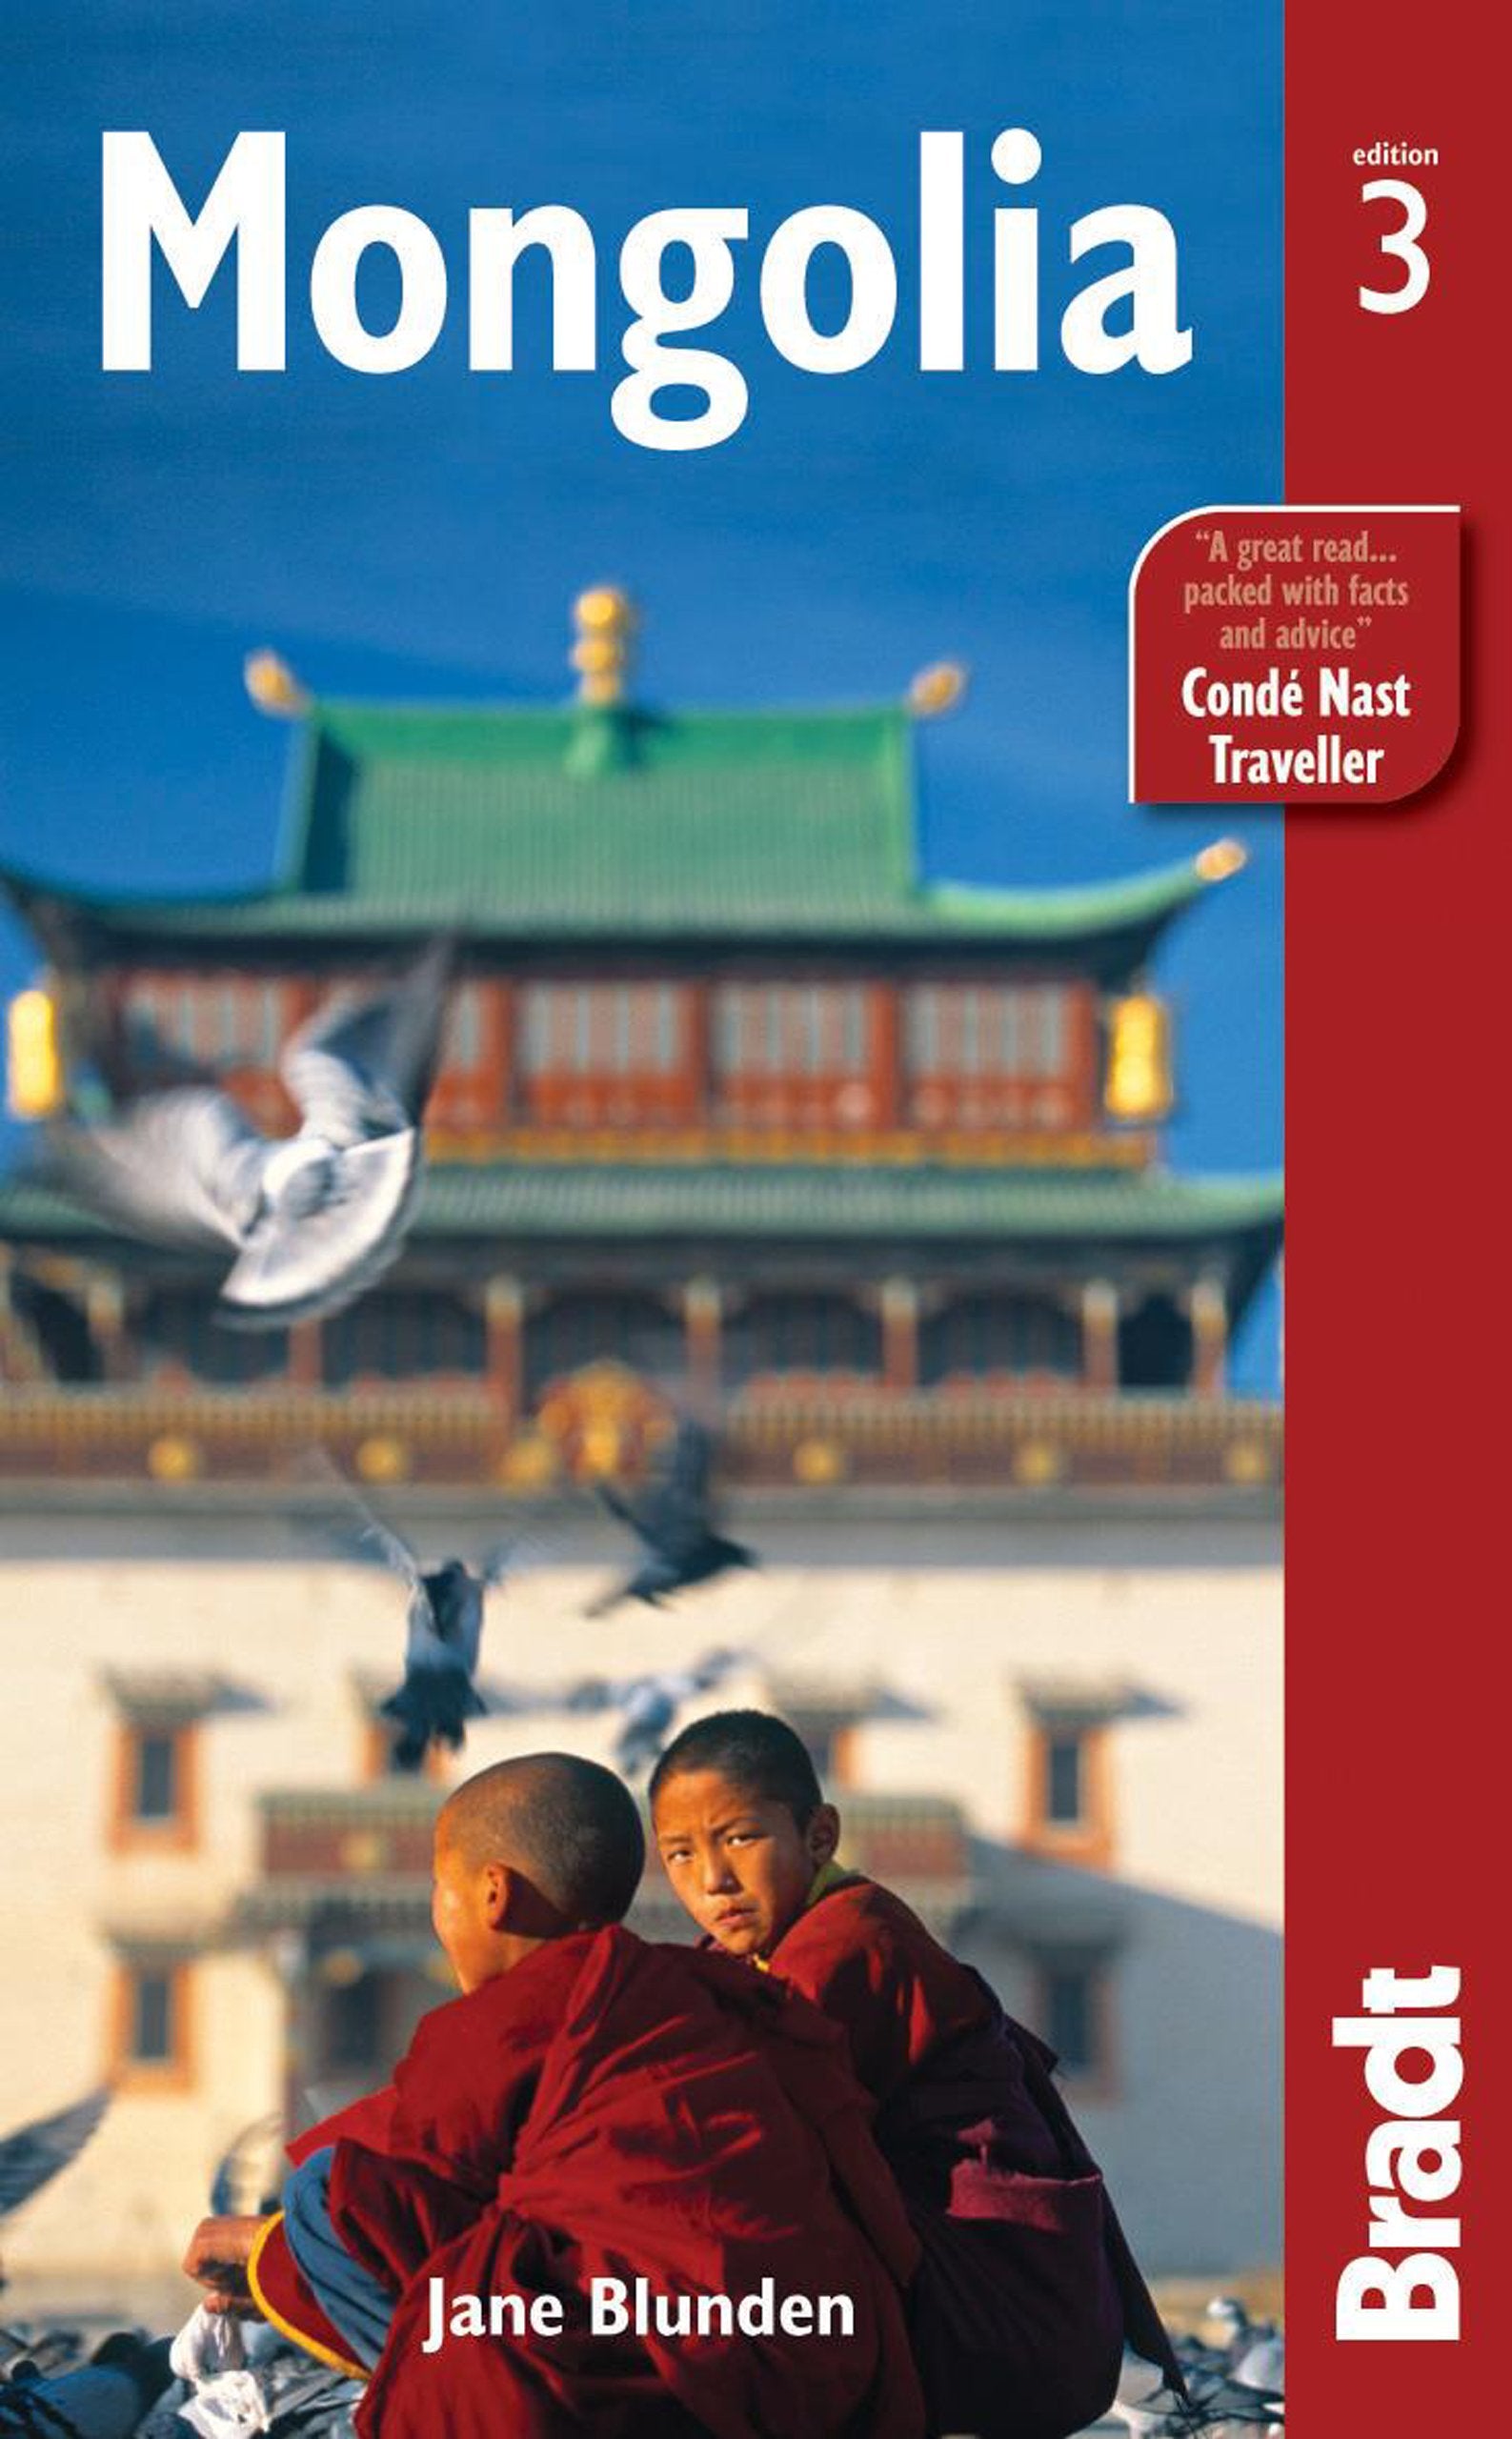 Mongolia (Mongolei) - Bradt Travel Guide